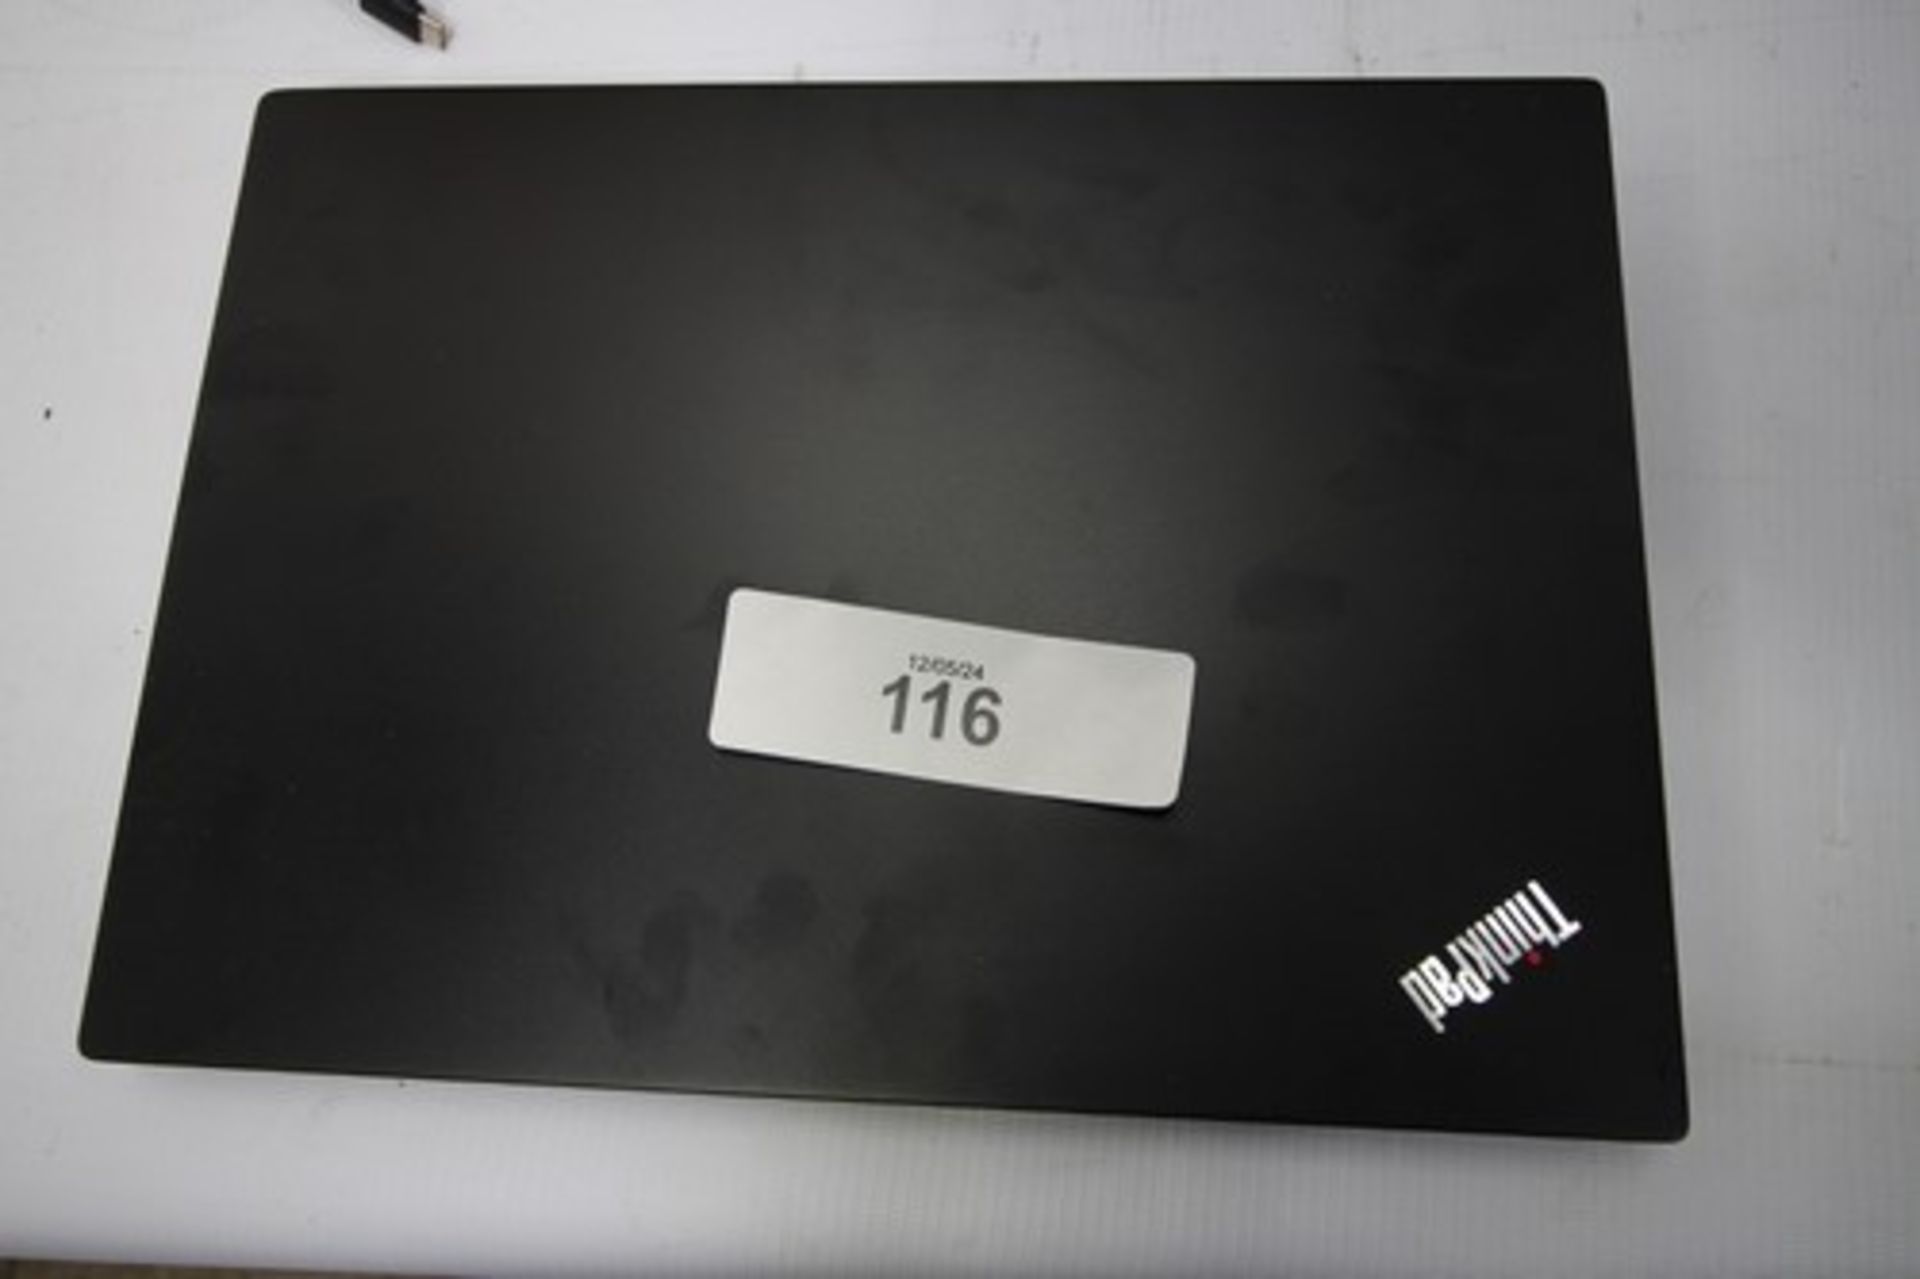 1 x Lenovo E14 Chrome Book laptop, model No: 7118670, powers on ok, unknown spec., factory reset - - Image 3 of 4